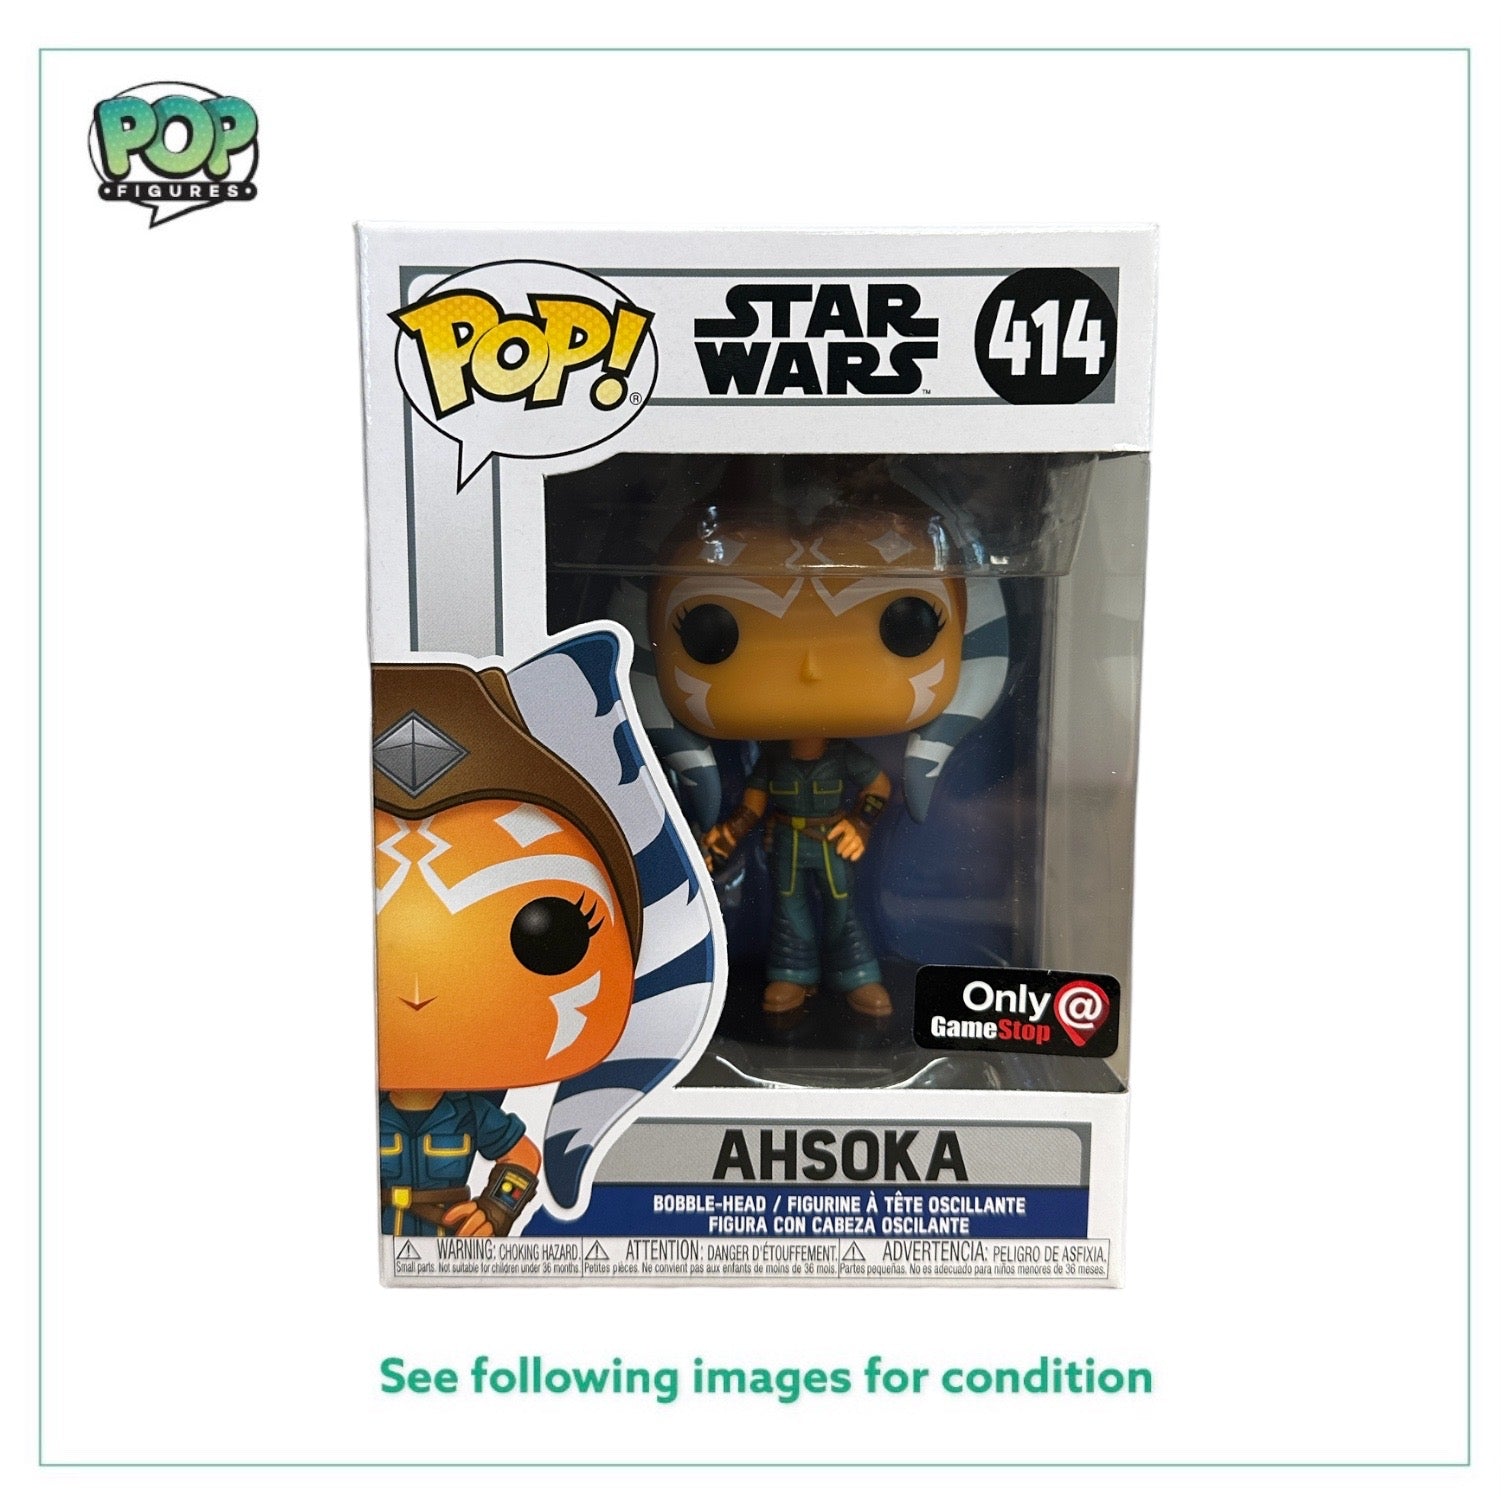 Ahsoka #414 (Jumpsuit) Funko Pop! - Star Wars The Clone Wars - GameStop Exclusive - Condition 8.75/10